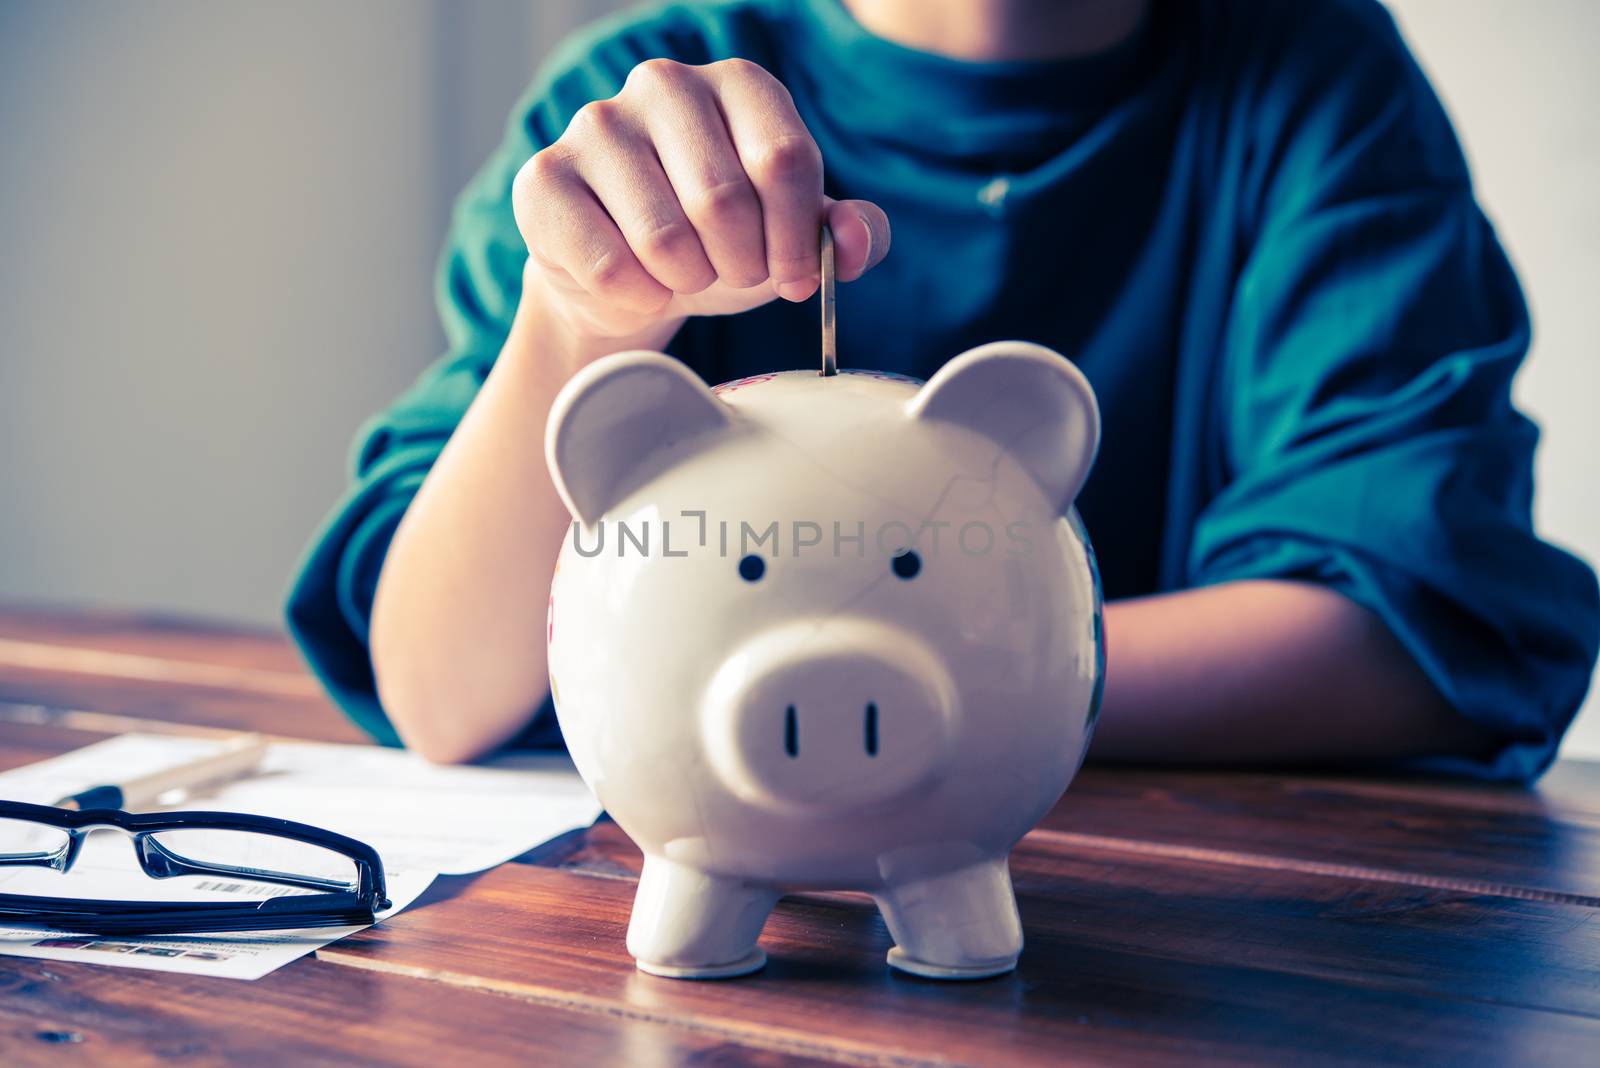 Hands are money  into a piggy bank - concept of saving.